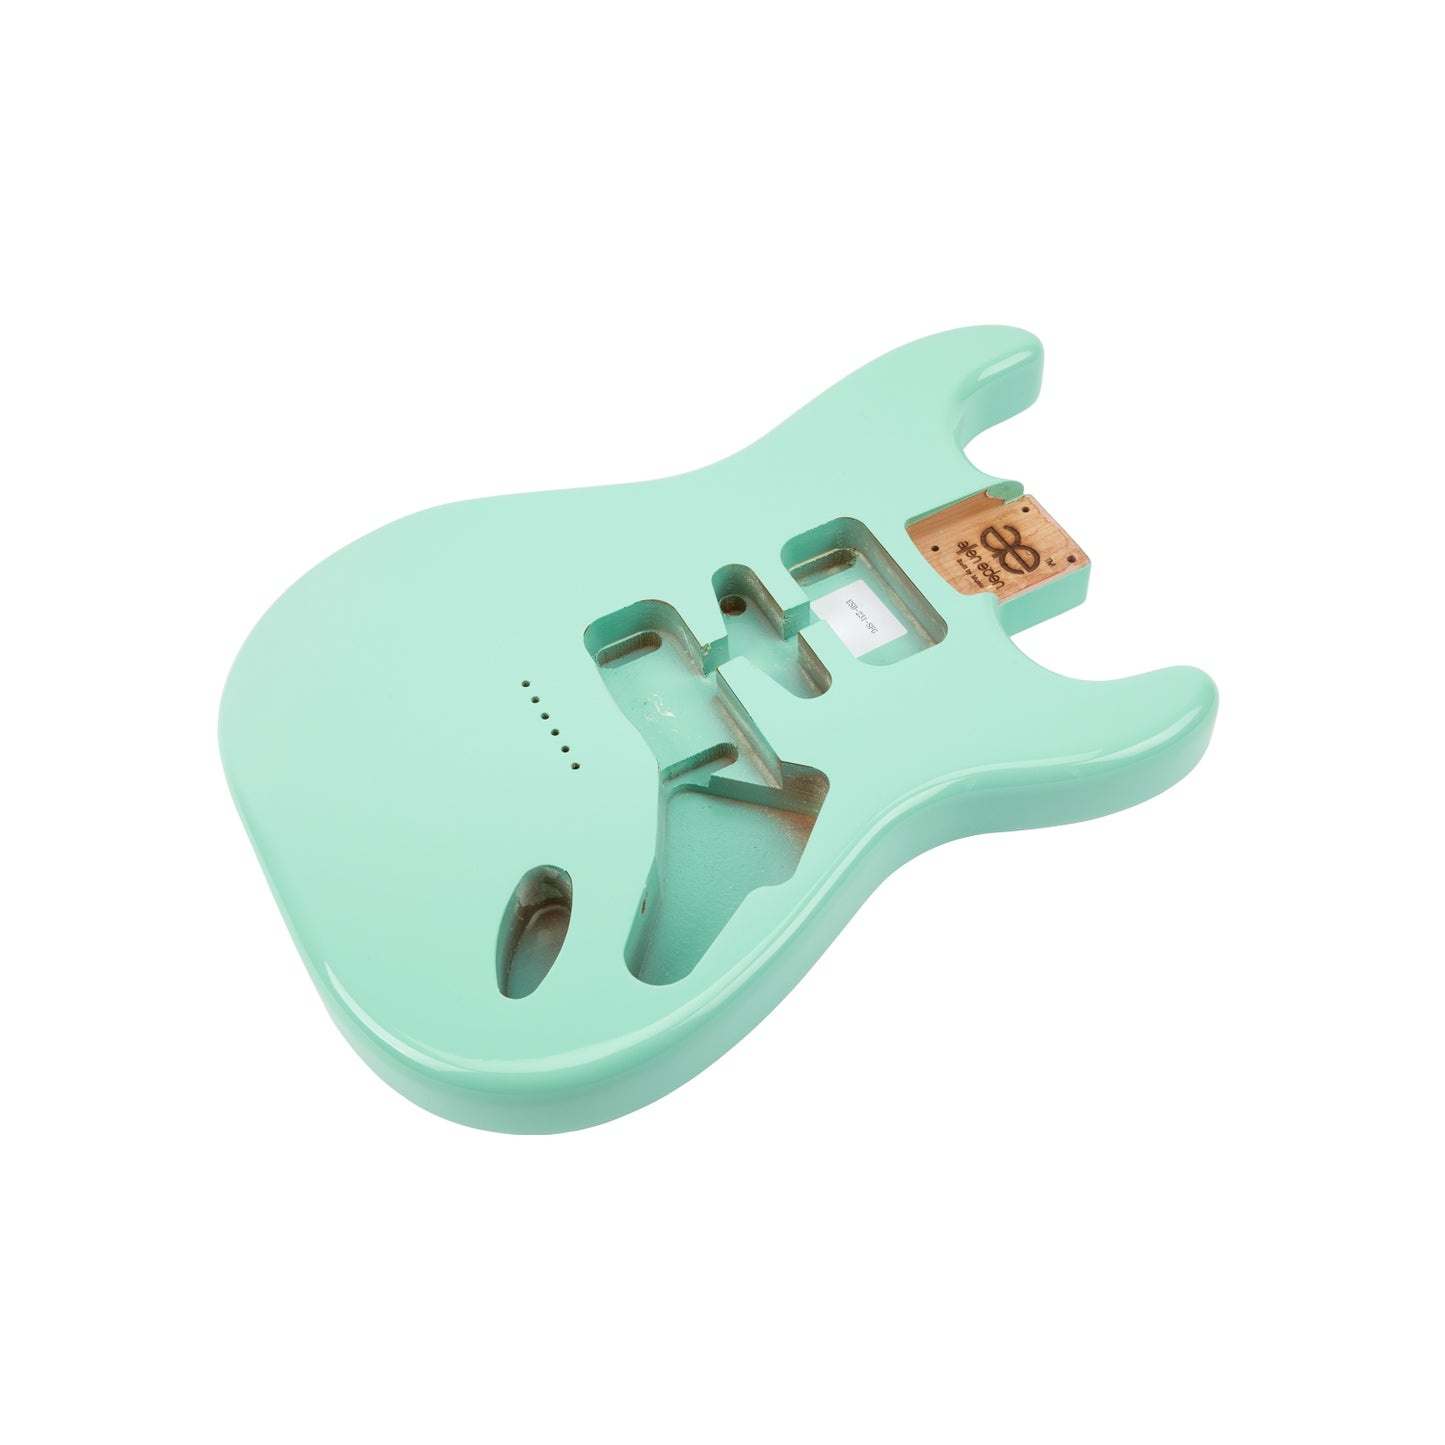 AE Guitars® S-Style Alder Replacement Guitar Body Seafoam Green